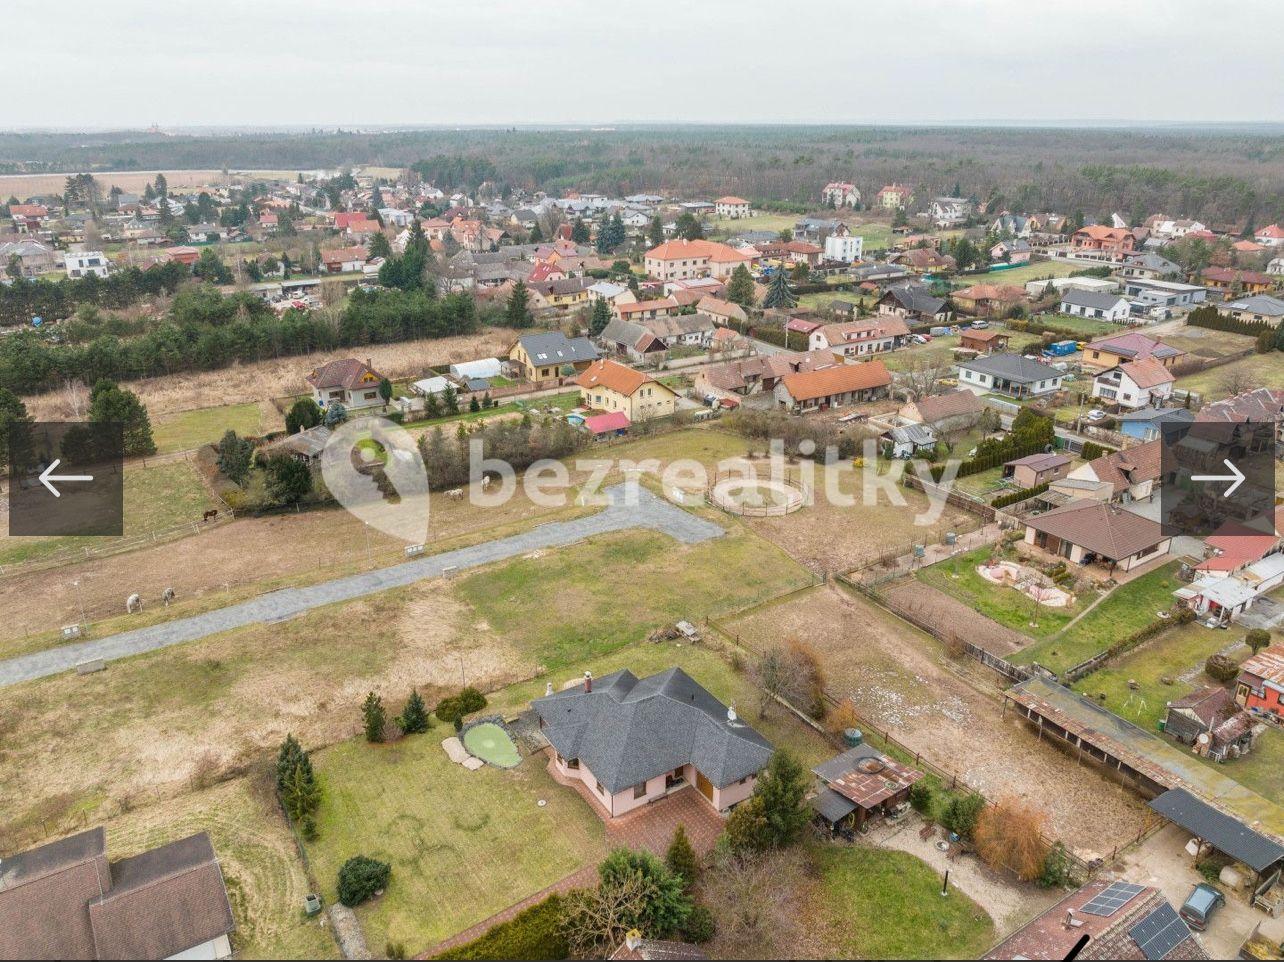 Predaj pozemku 906 m², Nový Vestec, Středočeský kraj